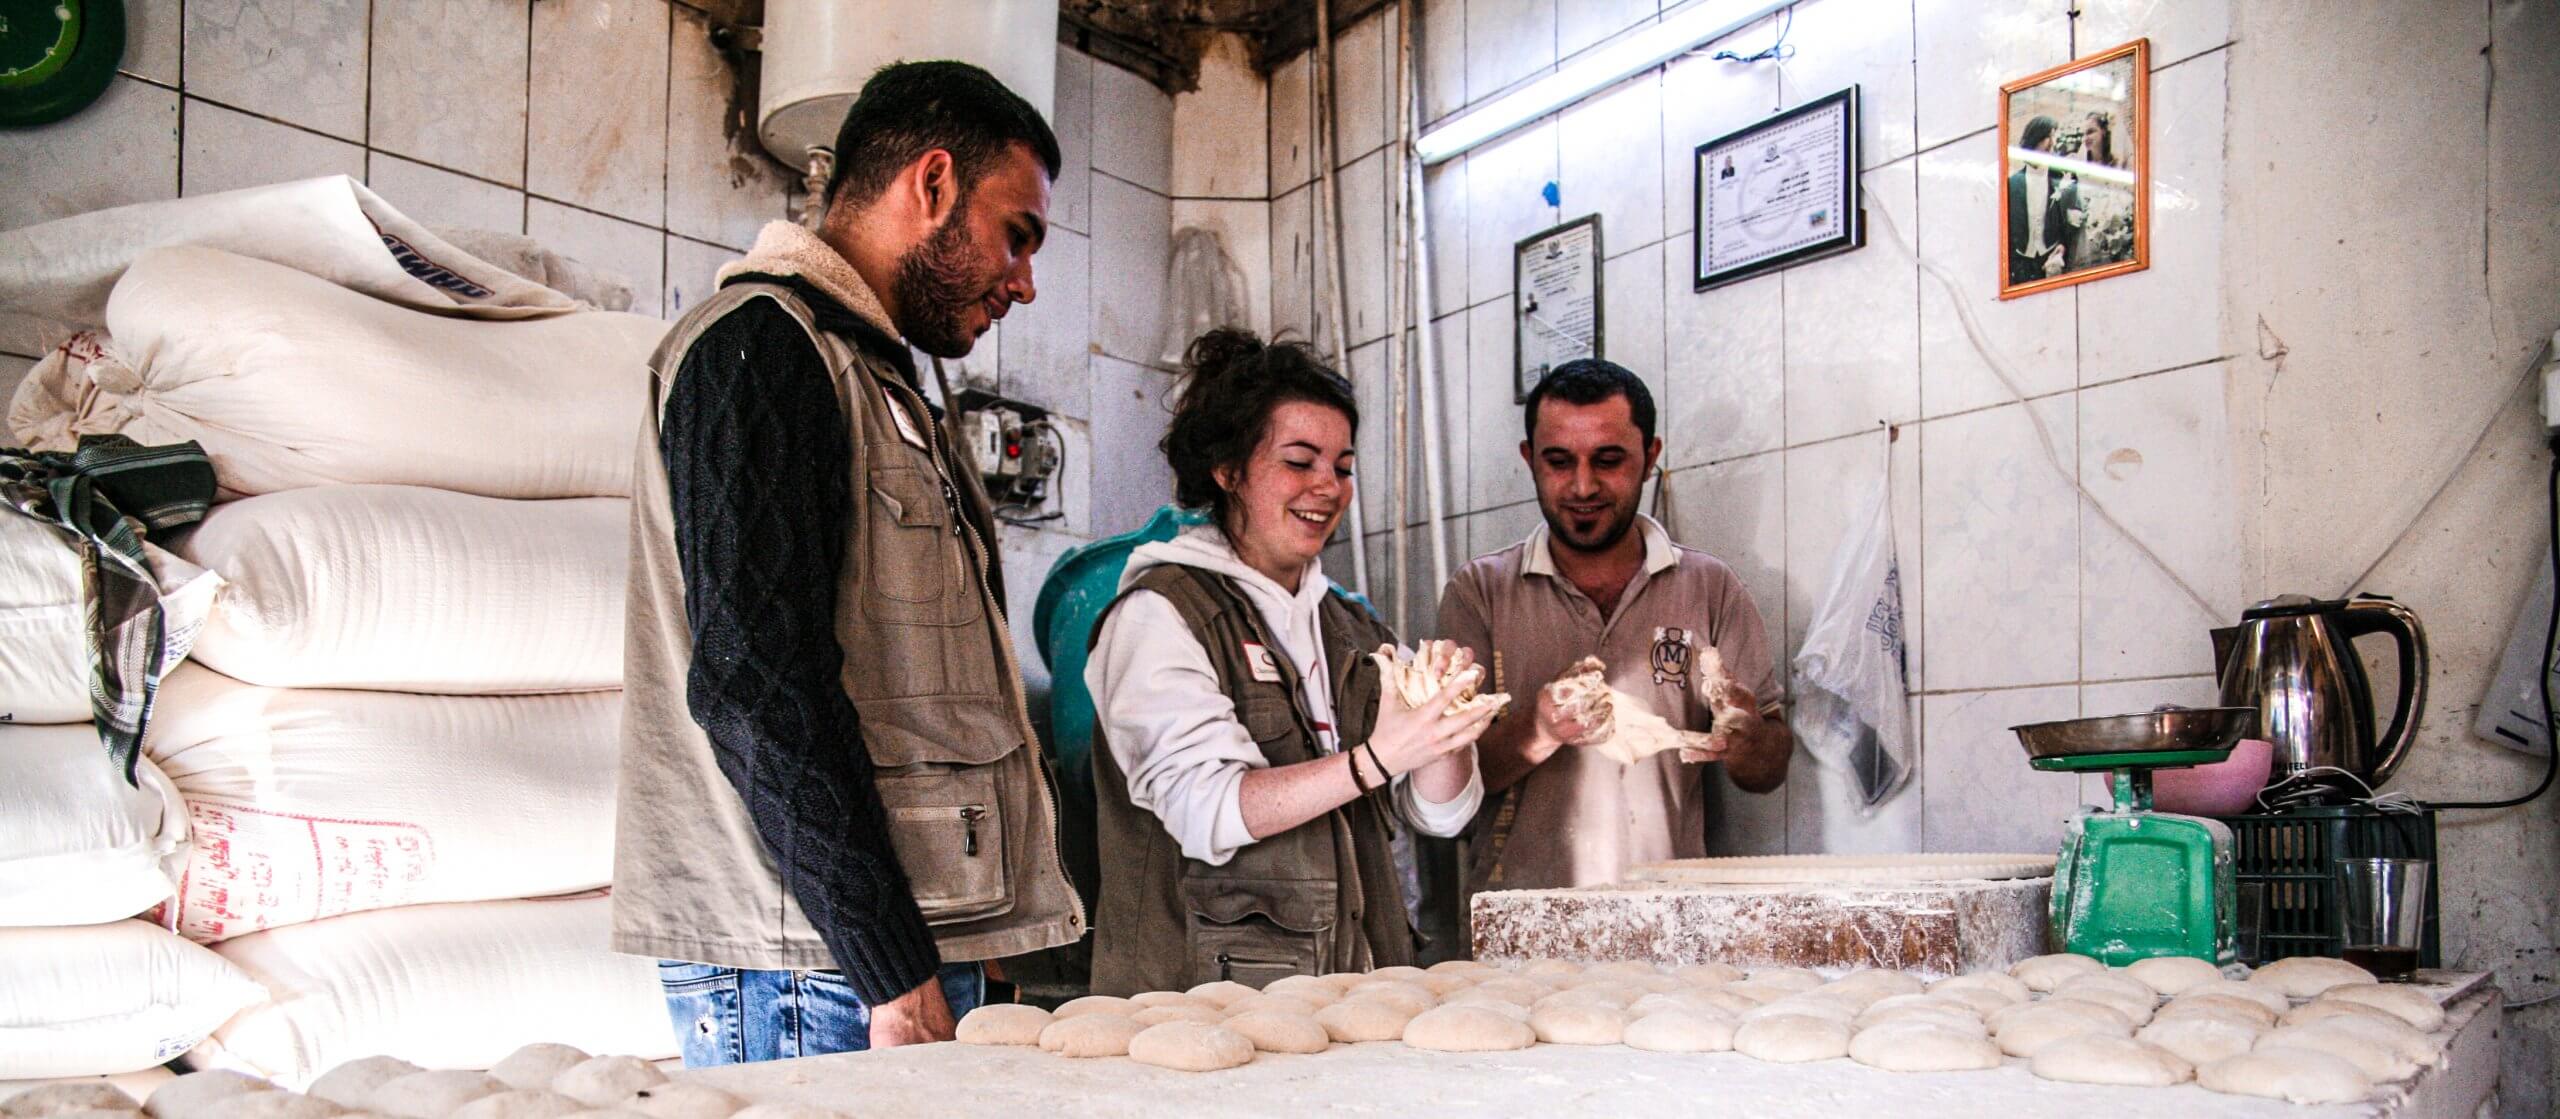 sos-chretiens-orient-irak-boulanger-et-volontaires